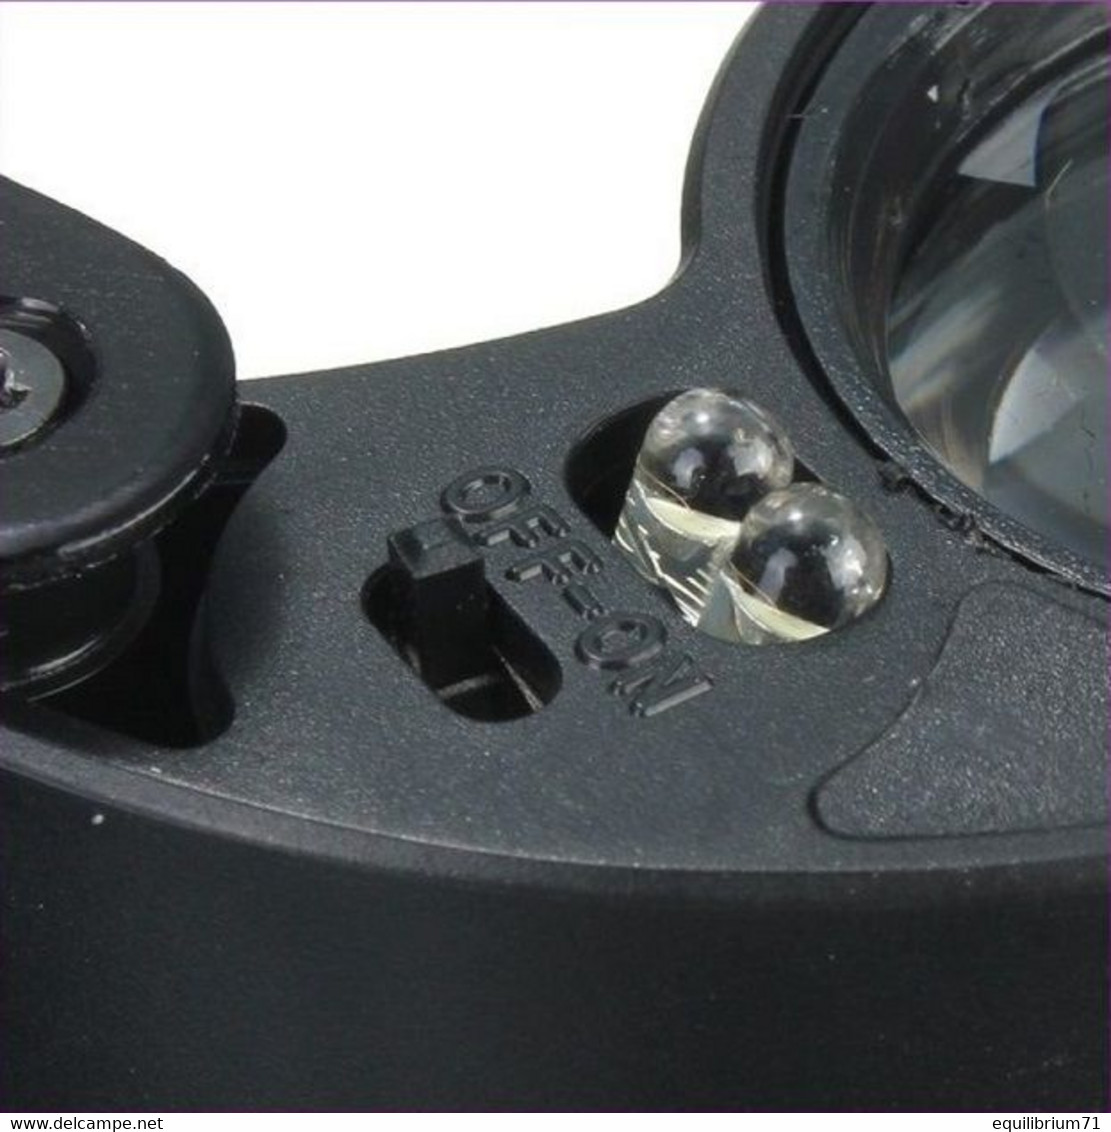 Loupe de poche / Opvouwbaar vergrootglas / Klapplupe / Folding magnifier - 40X + LED